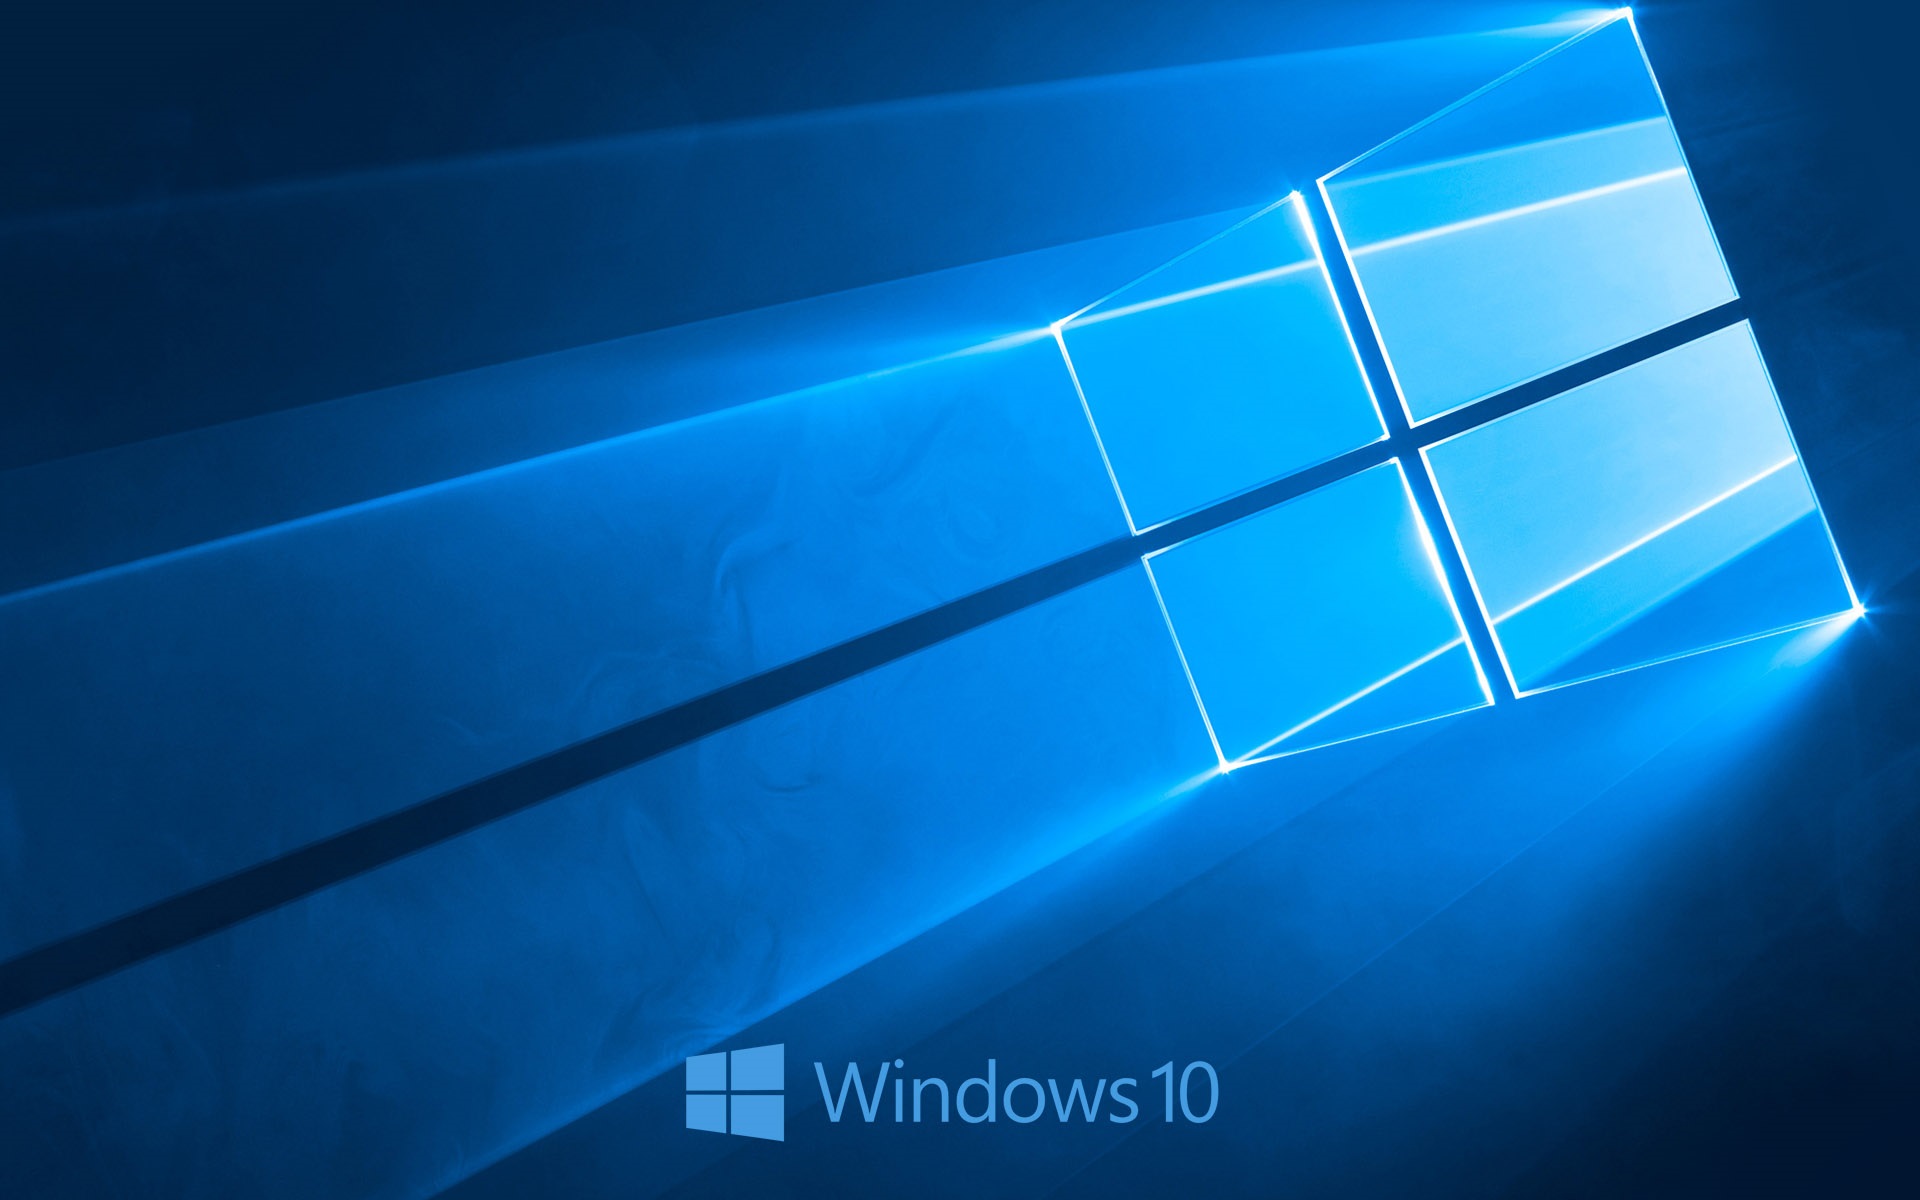 Windows-10-system-logo-blue-style-background_1920x1200.jpg